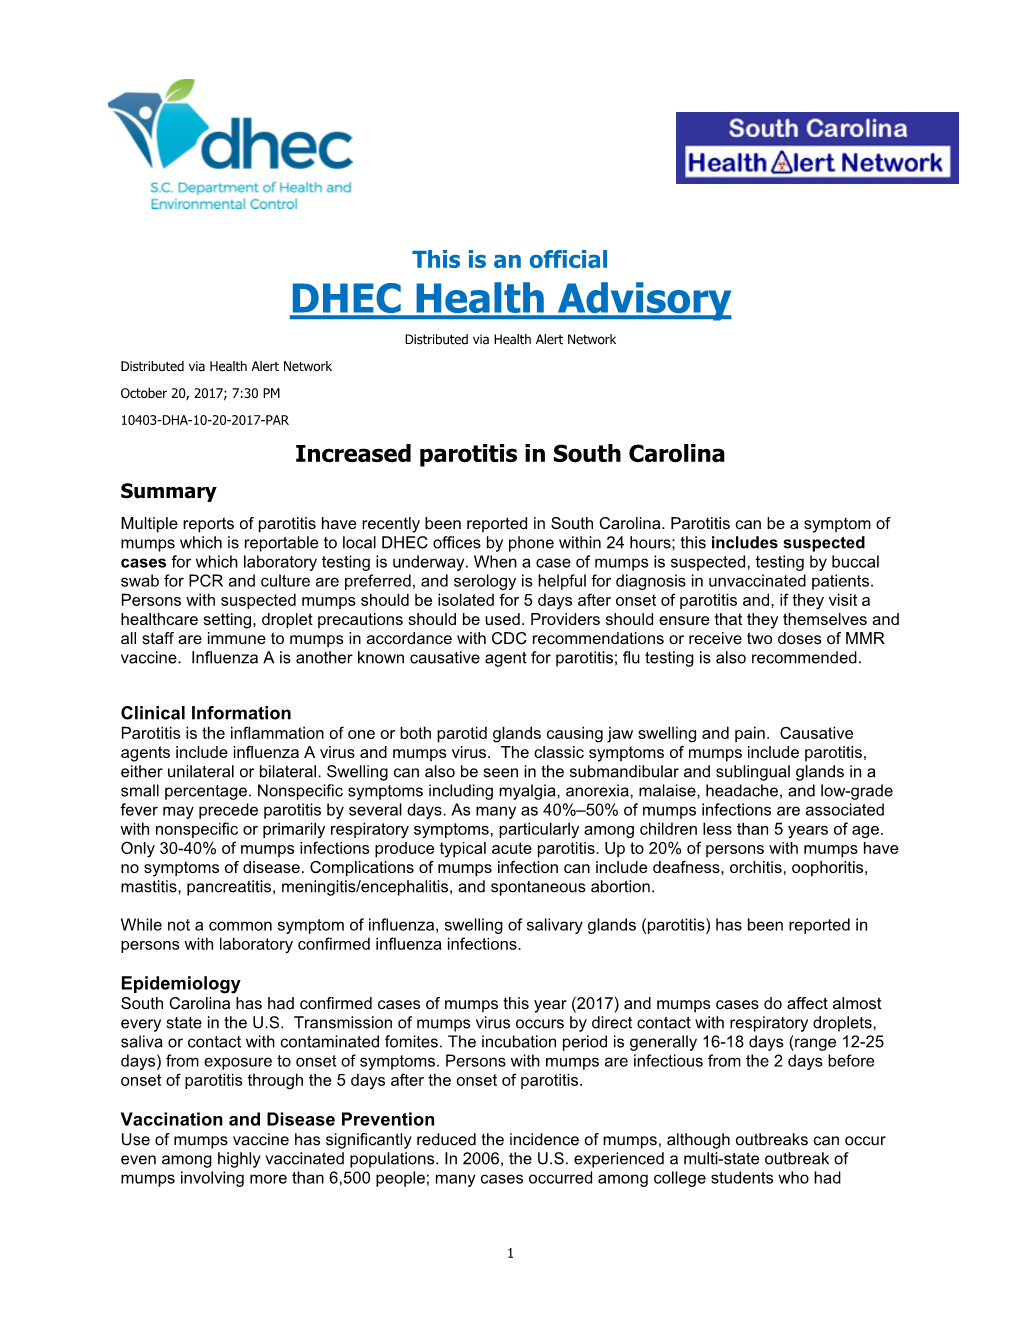 CDC/DHEC Health Alert-Advisory-Update